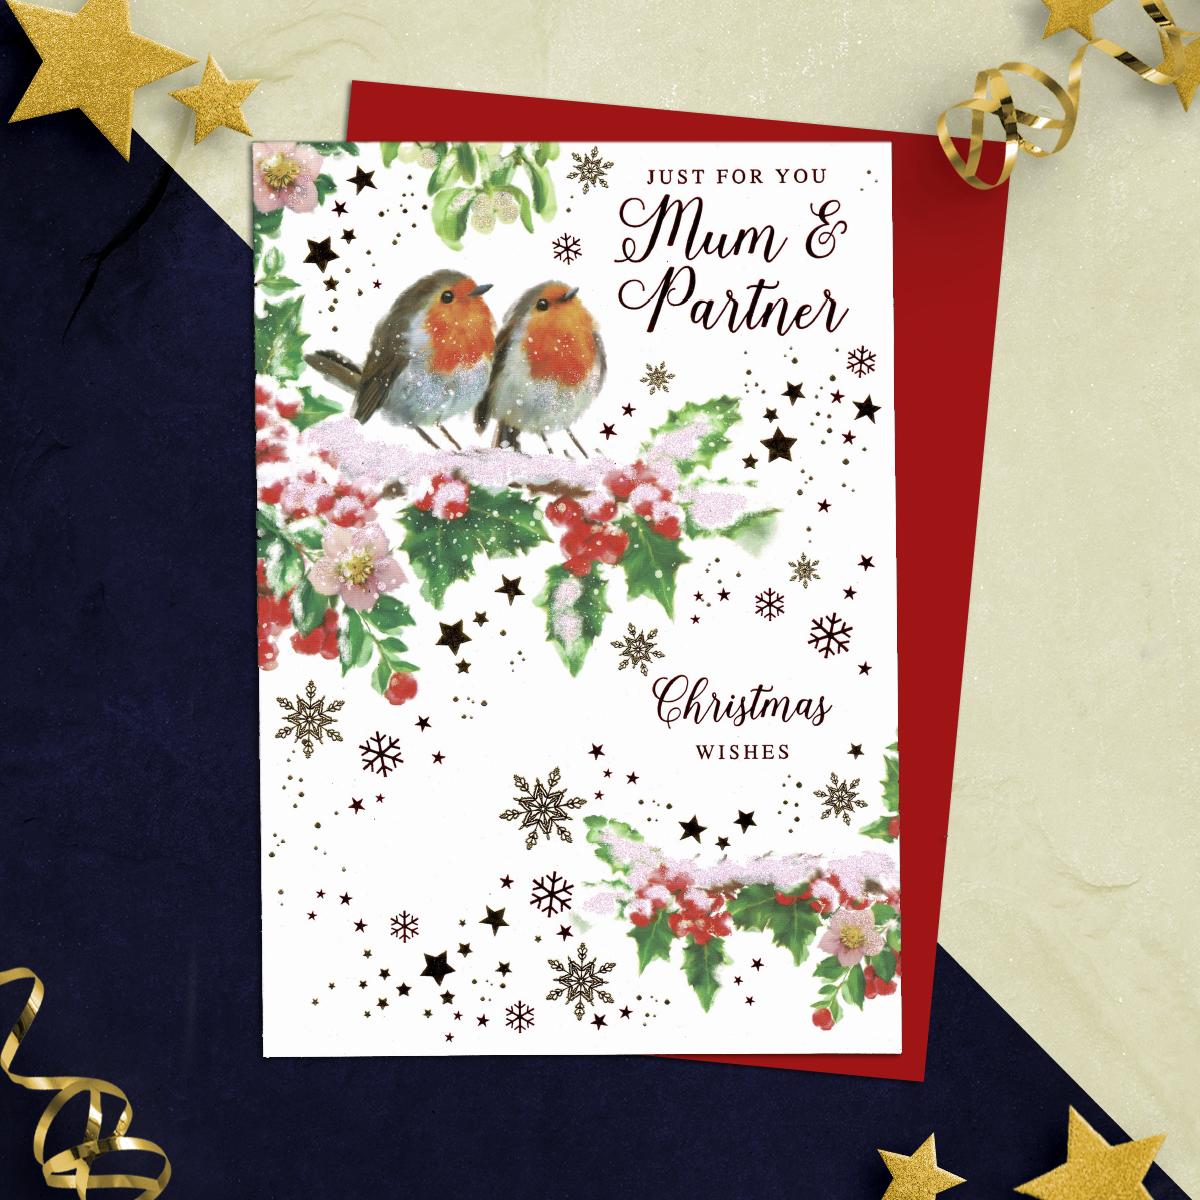 Mum And Partner Christmas Card Alongside Its Red Envelope